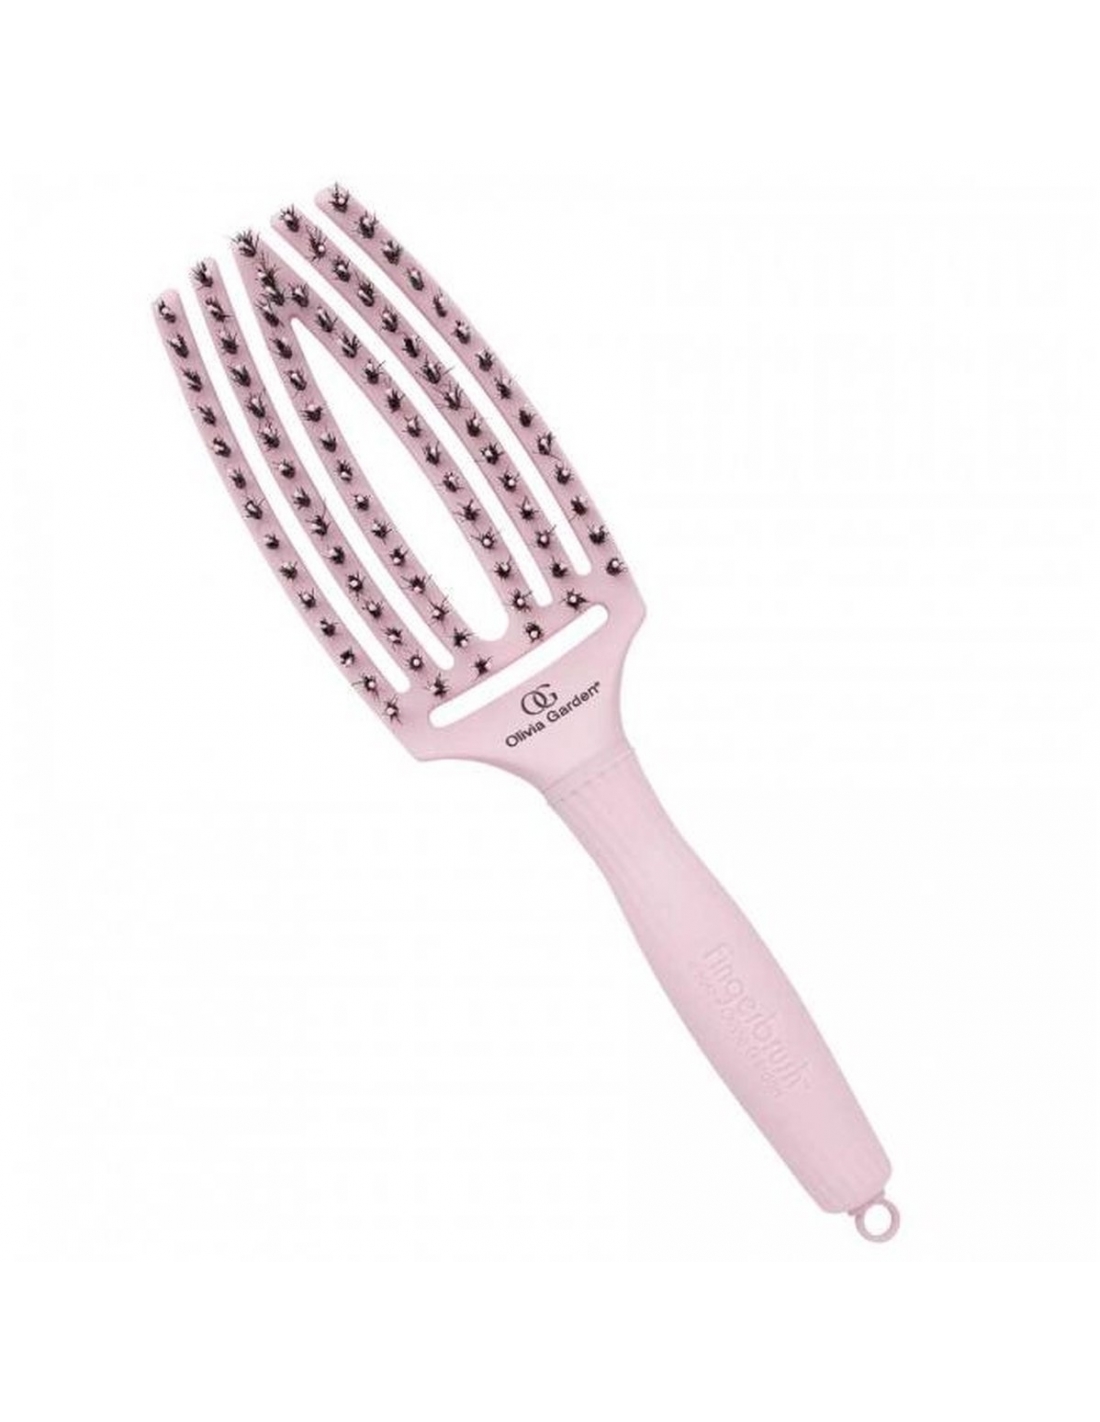 Olivia Garden Fingerbrush Combo Medium Pastel Pink